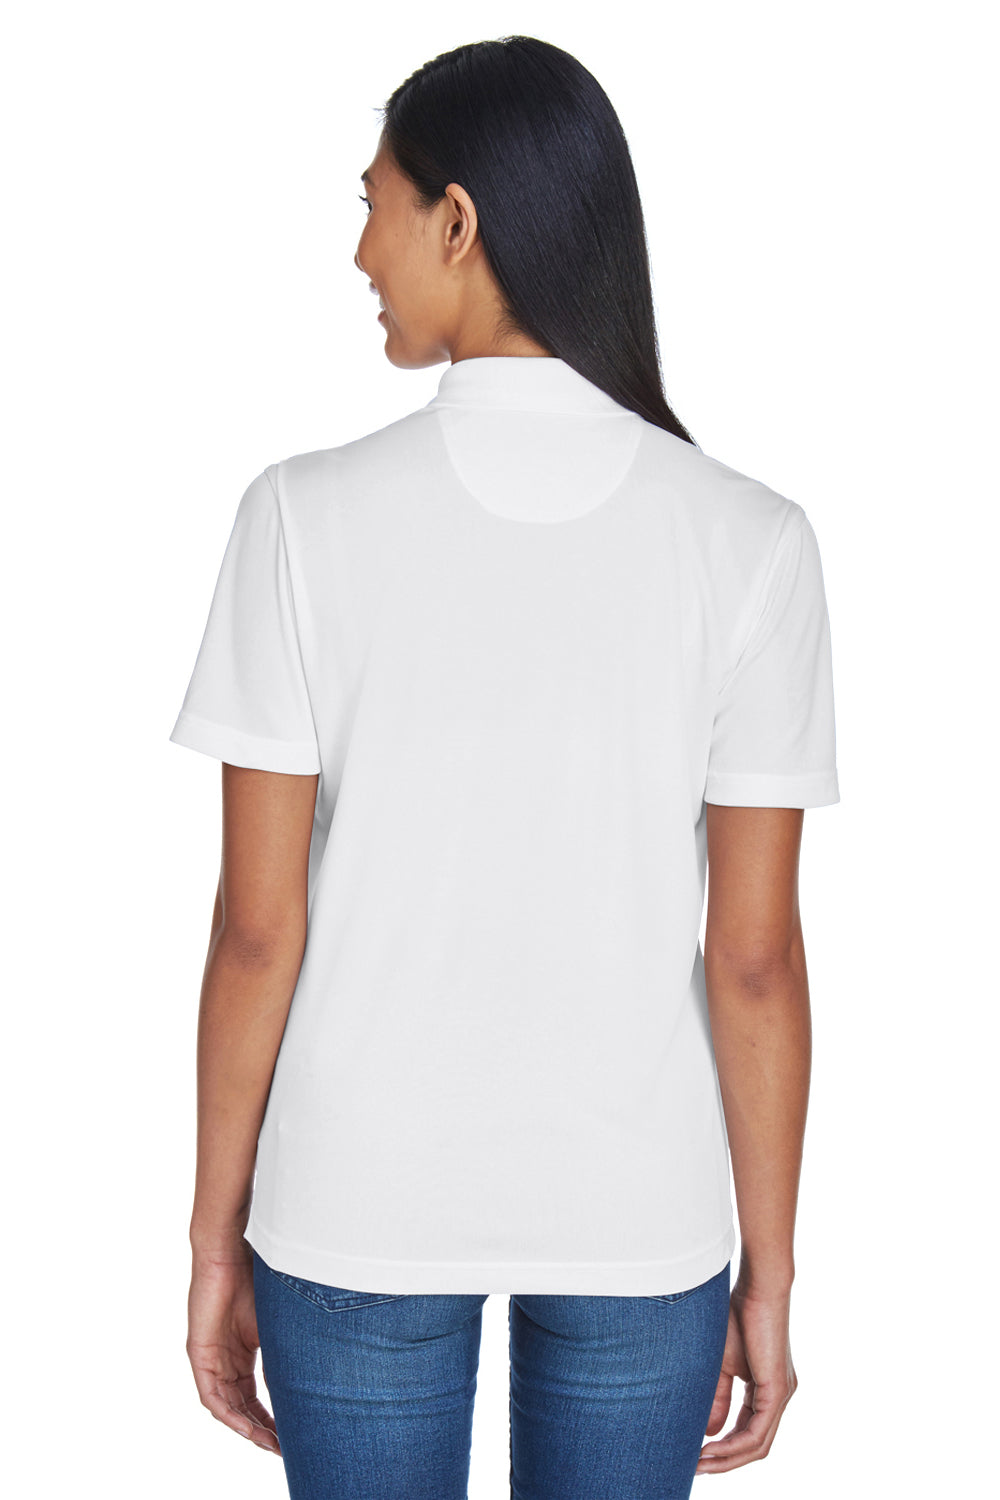 UltraClub 8404 Womens Cool & Dry Moisture Wicking Short Sleeve Polo Shirt White Back